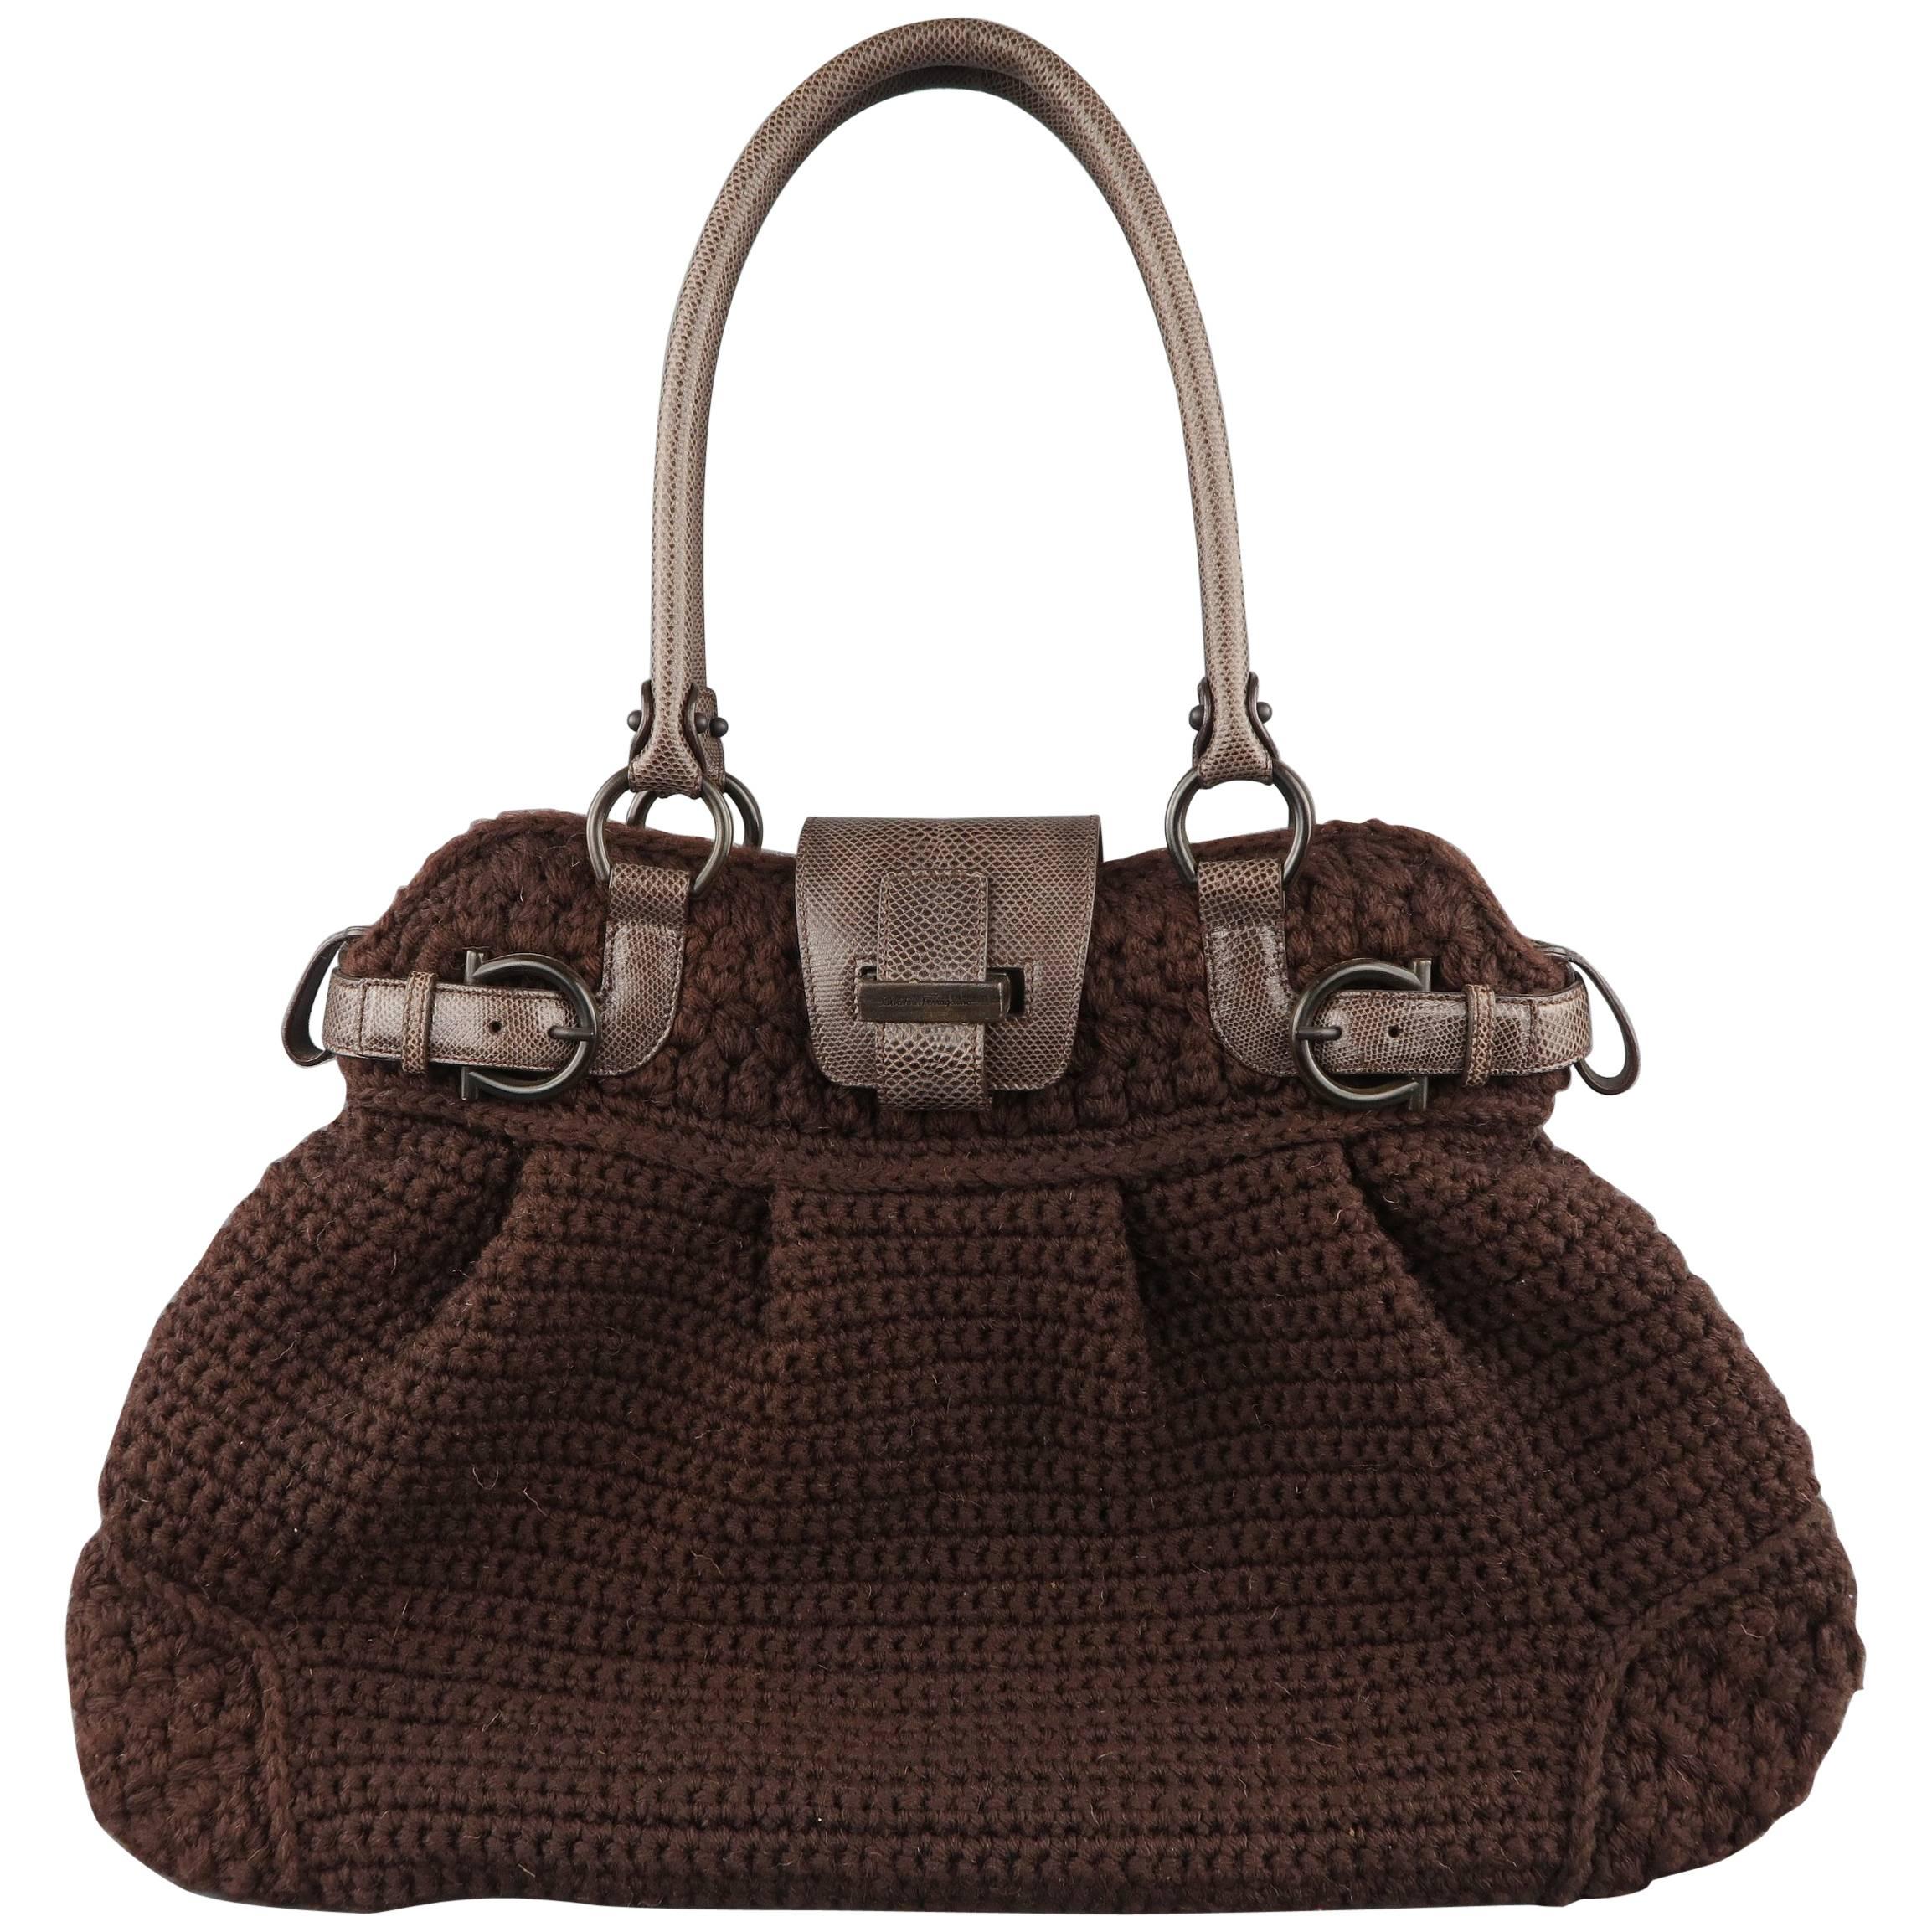 SALVATORE FERRAGAMO Brown Chrochet Knit Leather Top Handles Handbag